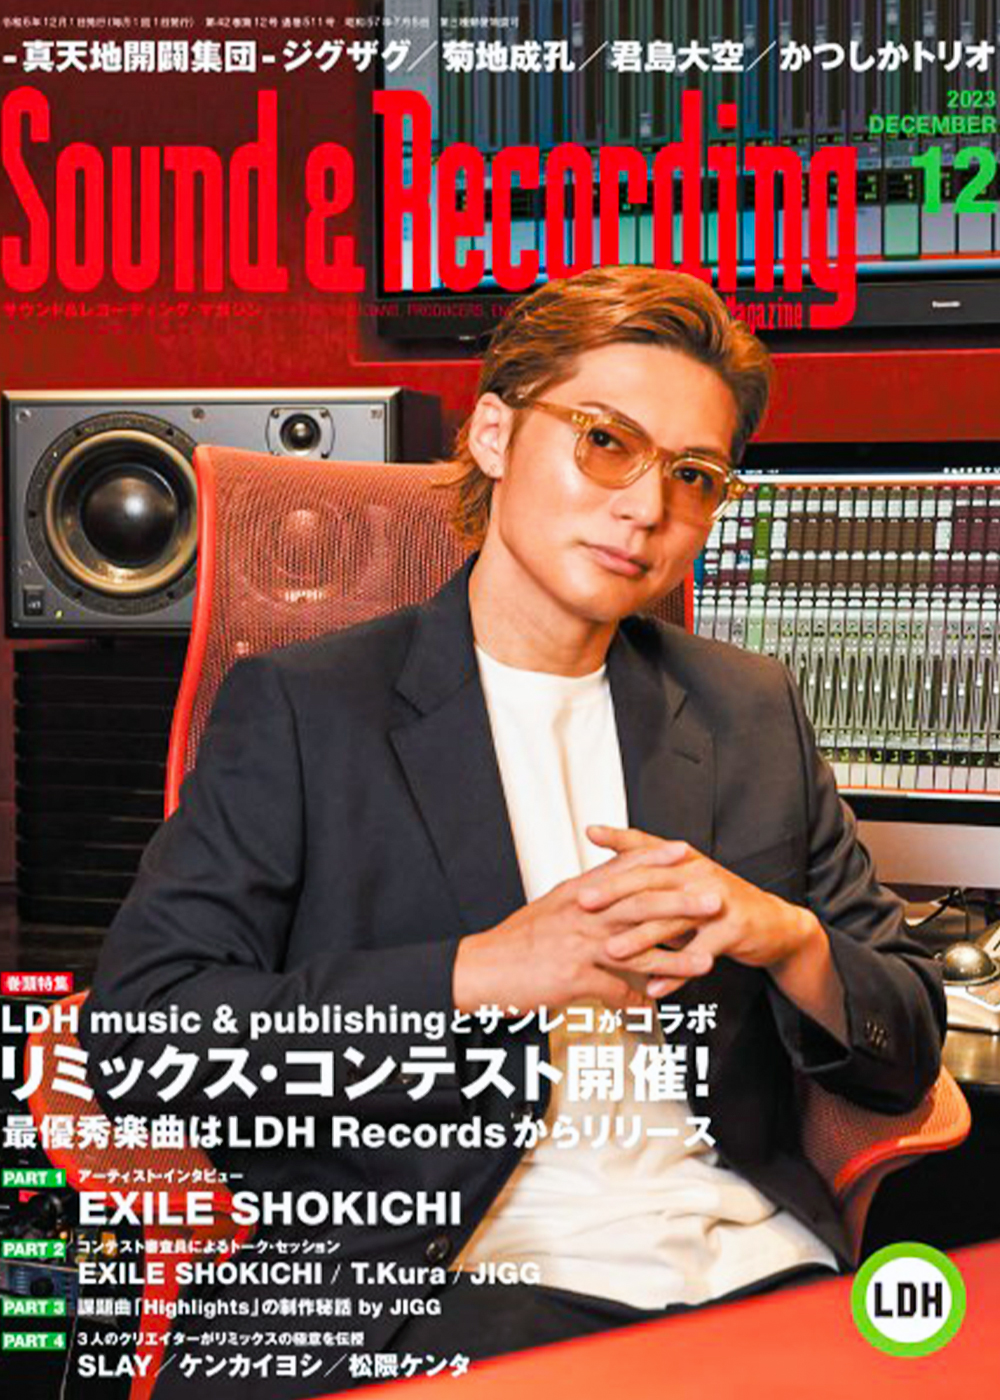 ★ Sound & Recording Magazine ★